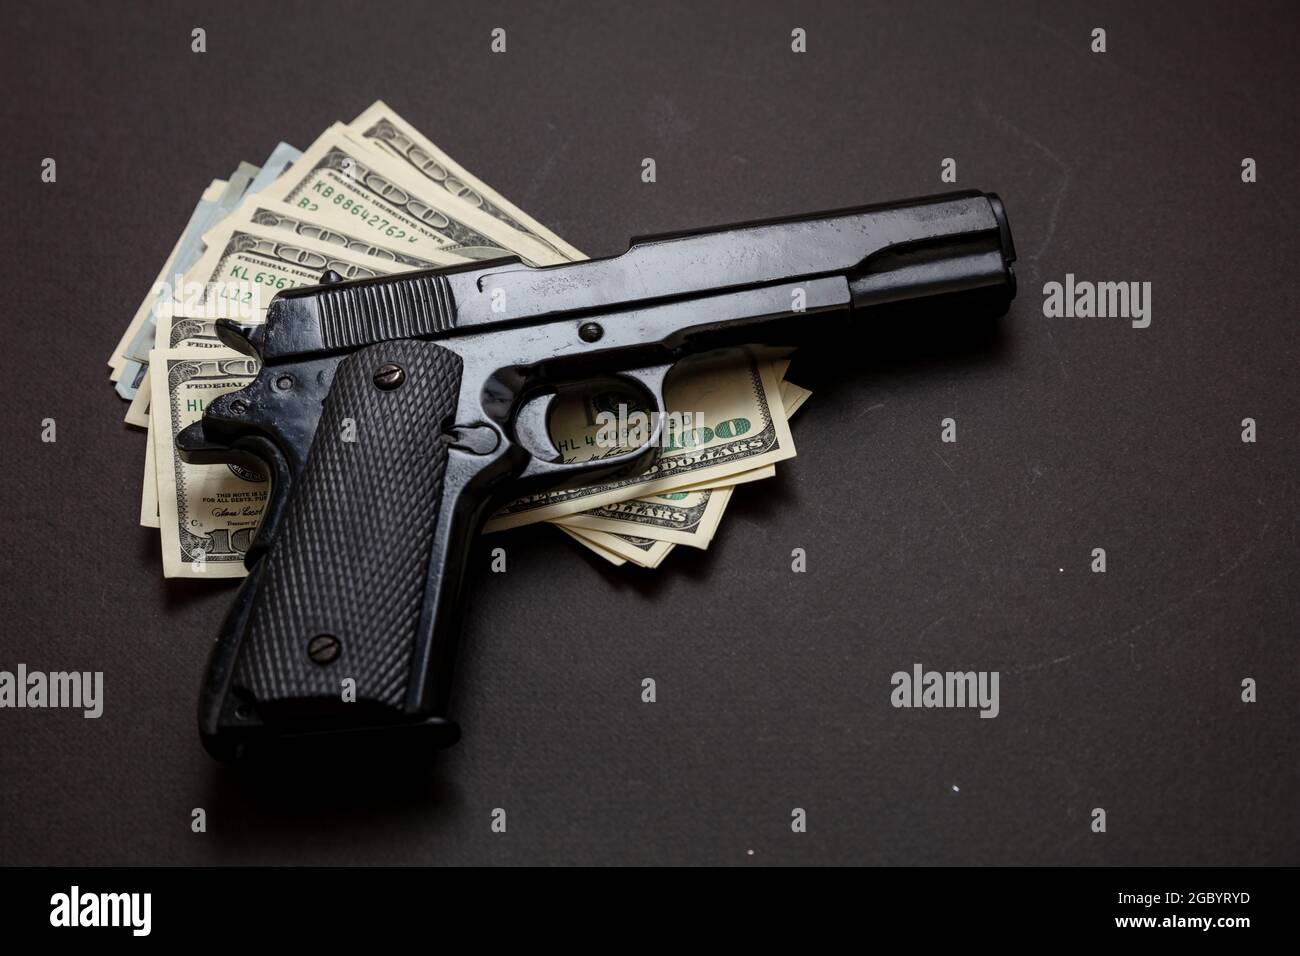 Criminal money, mafia and corruption concept, Crime concept, pistol handgun 9 mm and American dollar banknotes on black background. Stock Photo